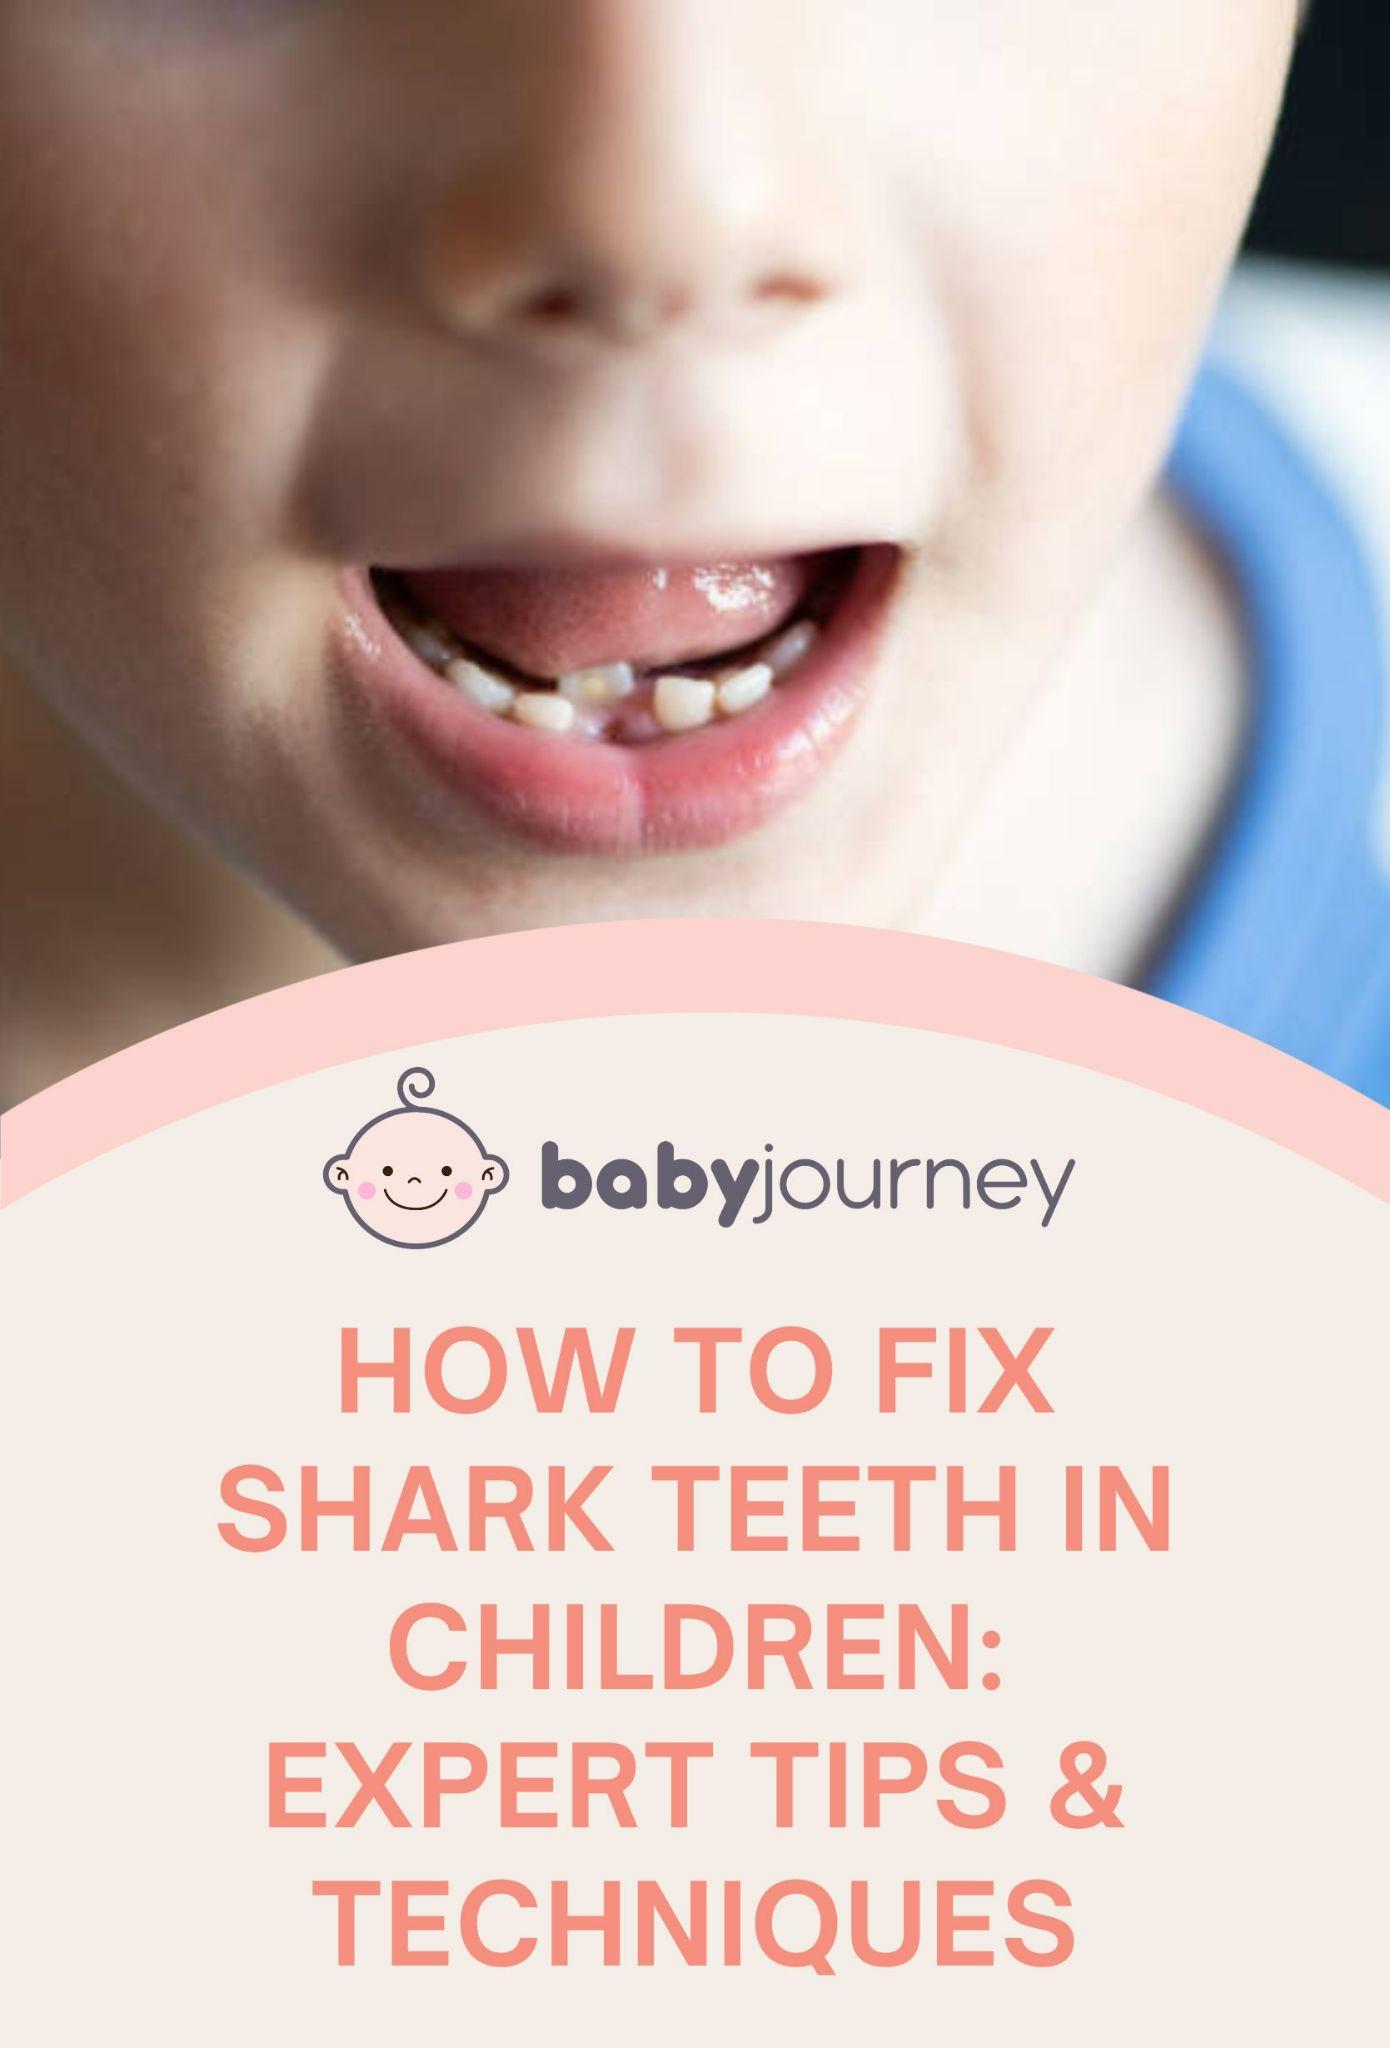 How to Fix Shark Teeth in Children: Expert Tips & Techniques Pinterest Image - Baby Journey 